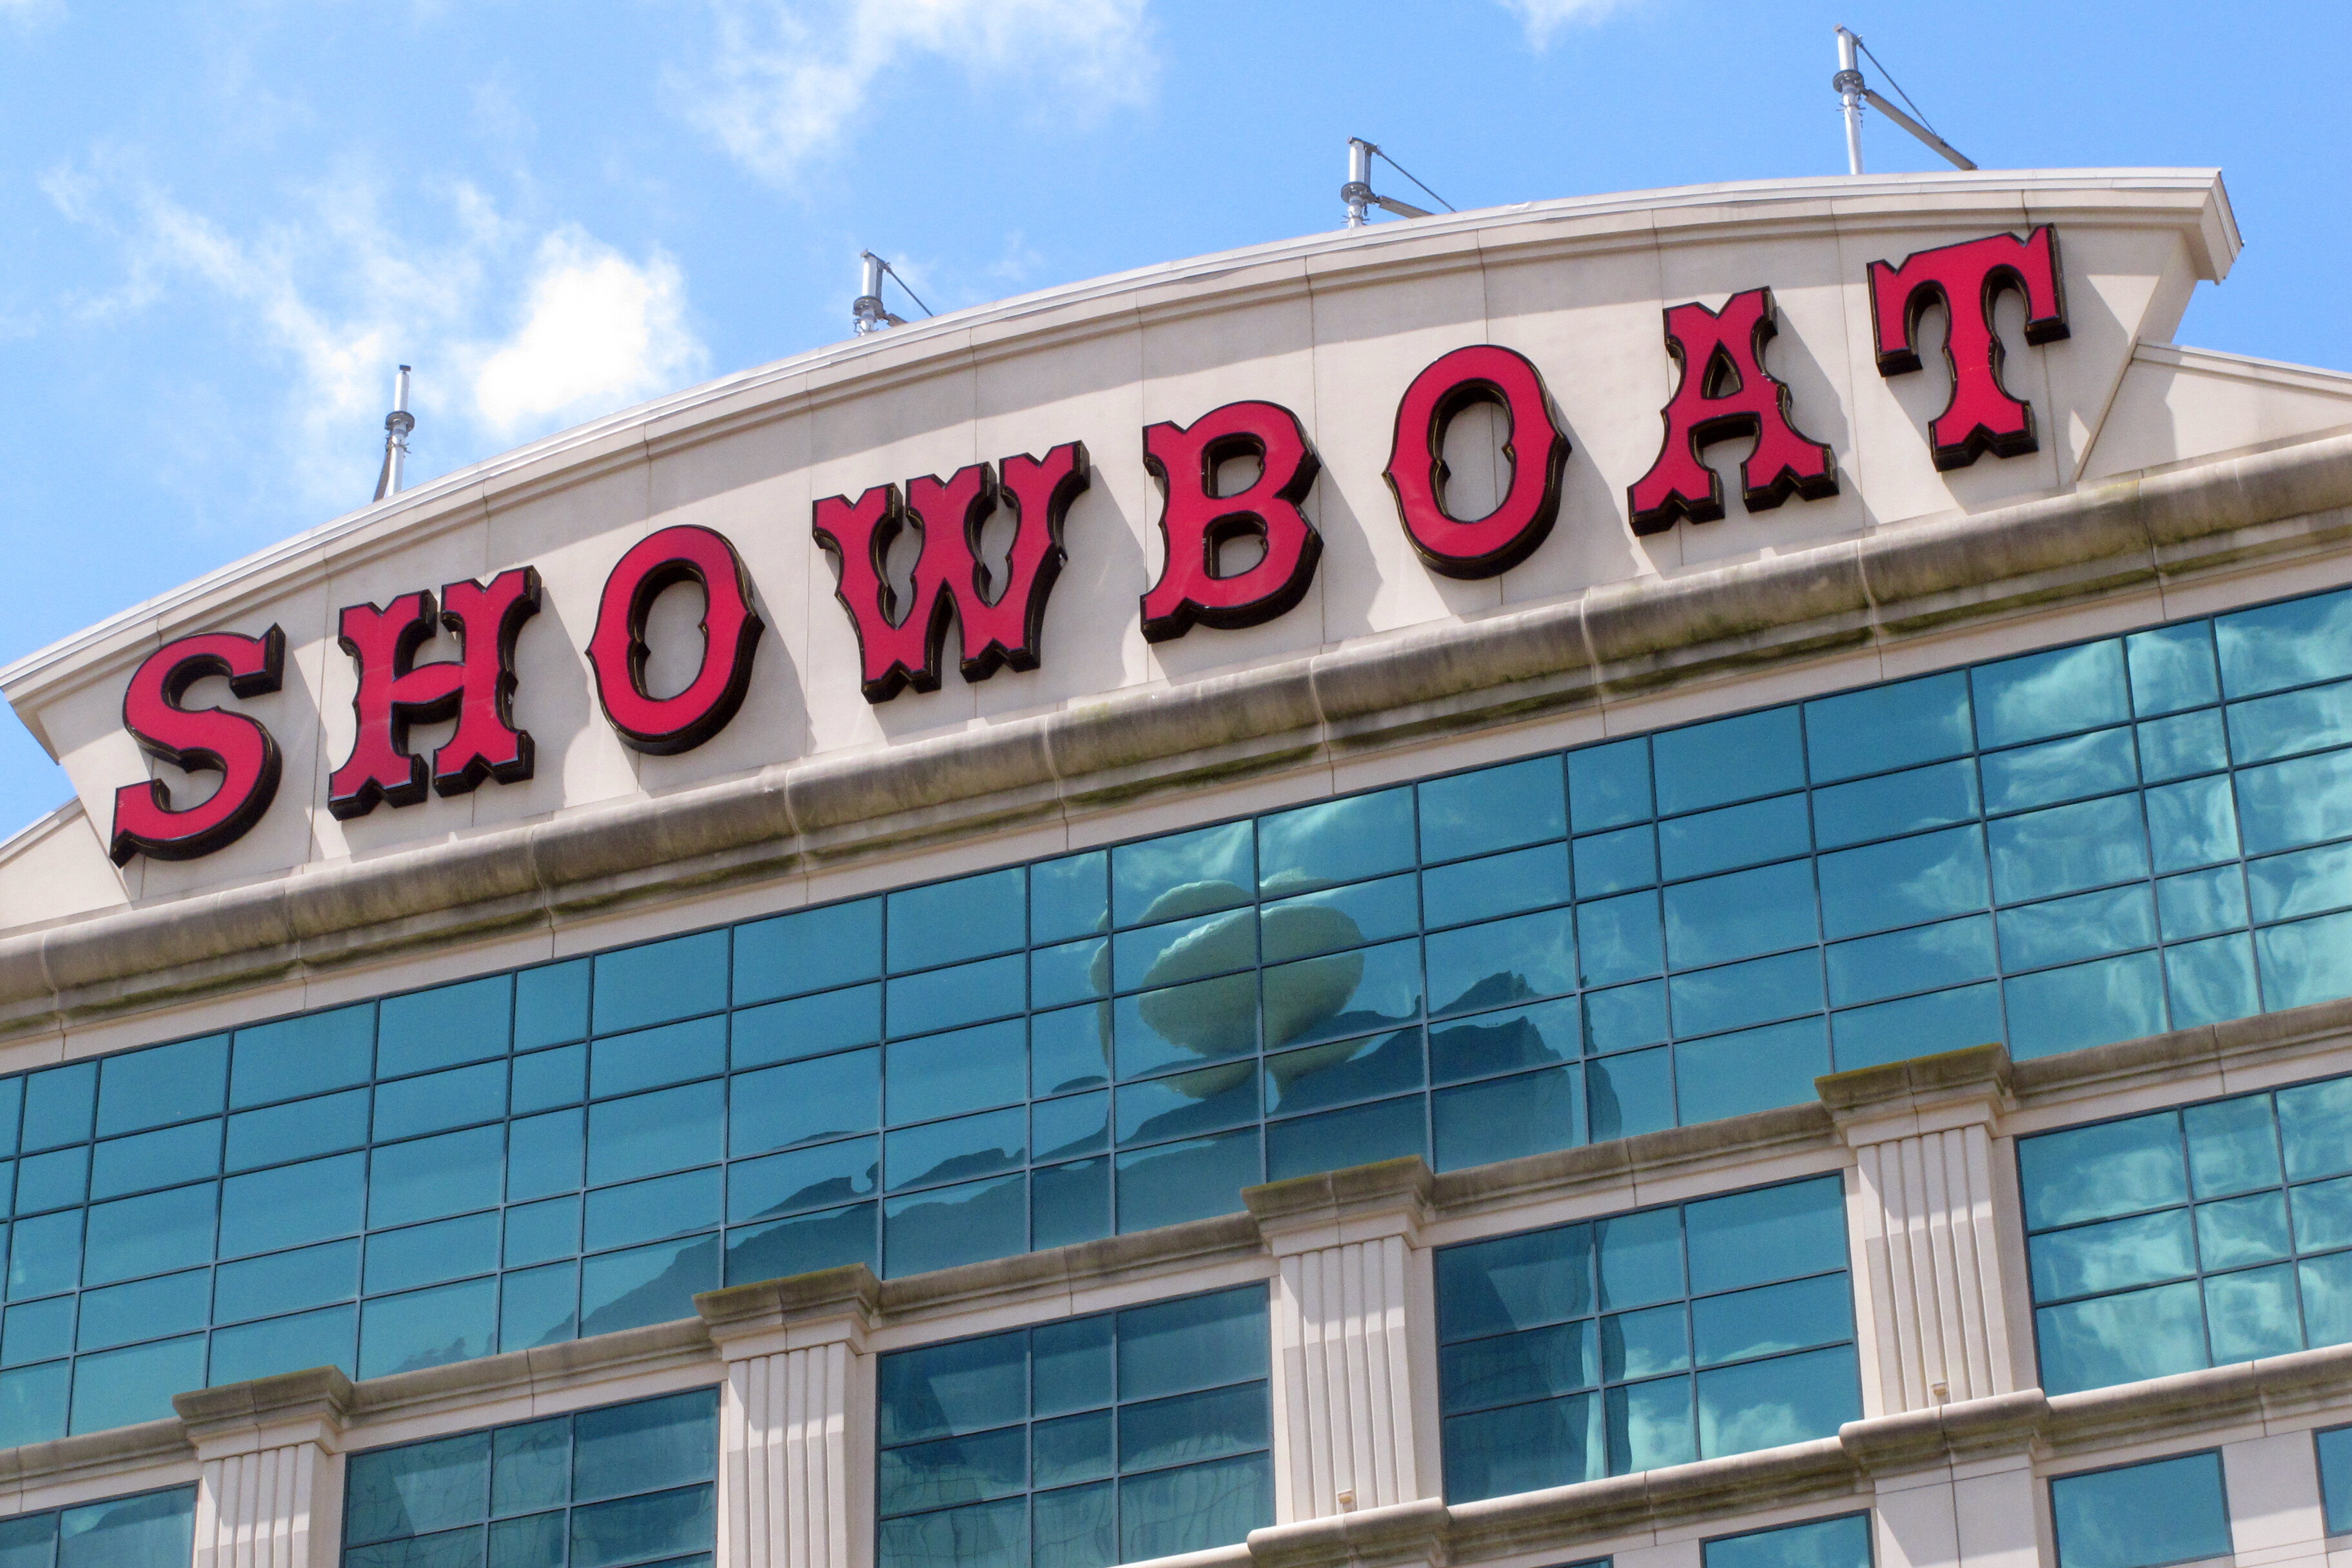 1989 showboat casino atlantic city robbery shooting